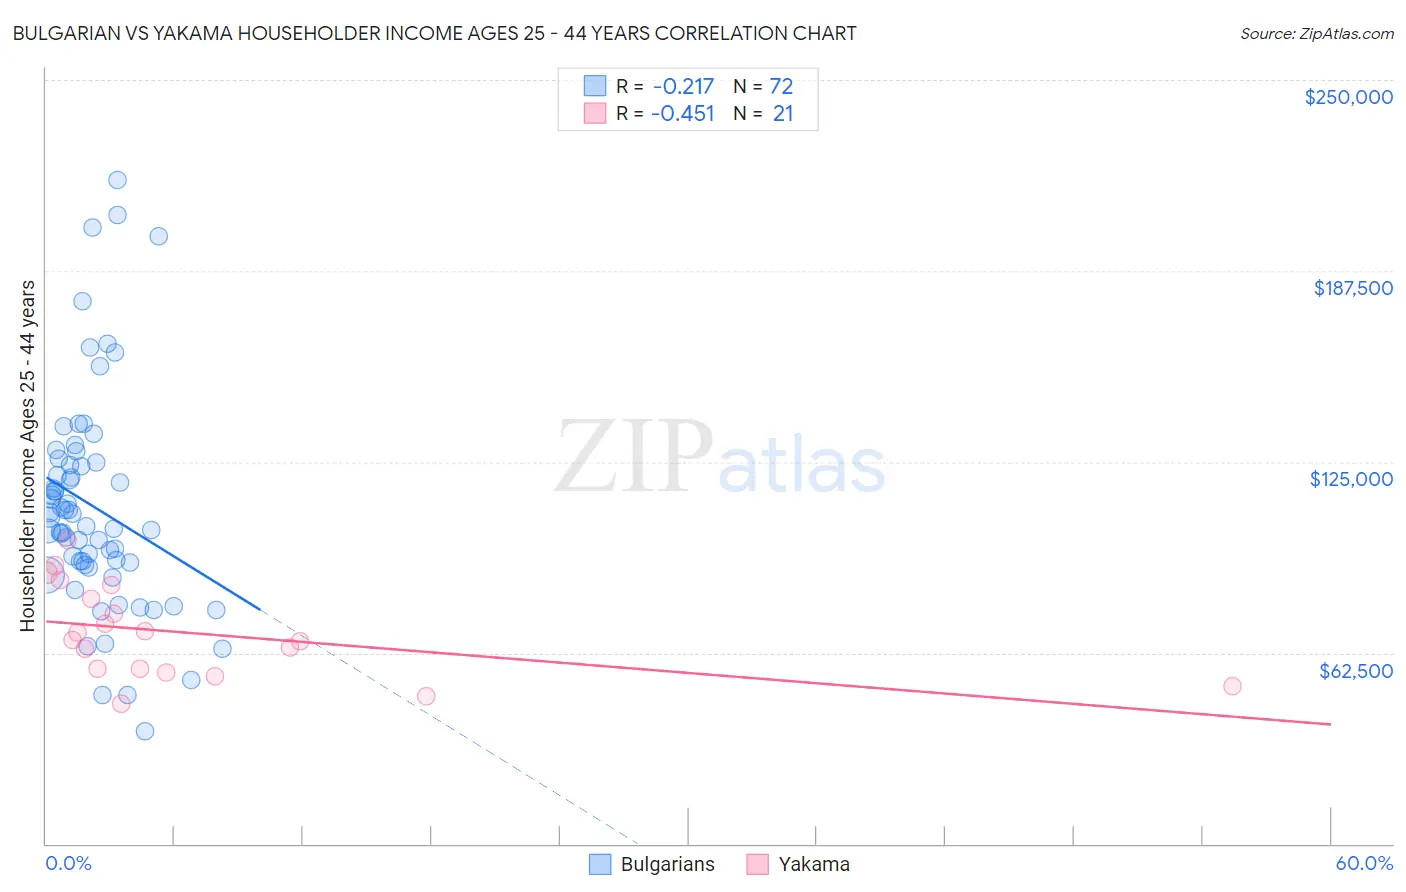 Bulgarian vs Yakama Householder Income Ages 25 - 44 years